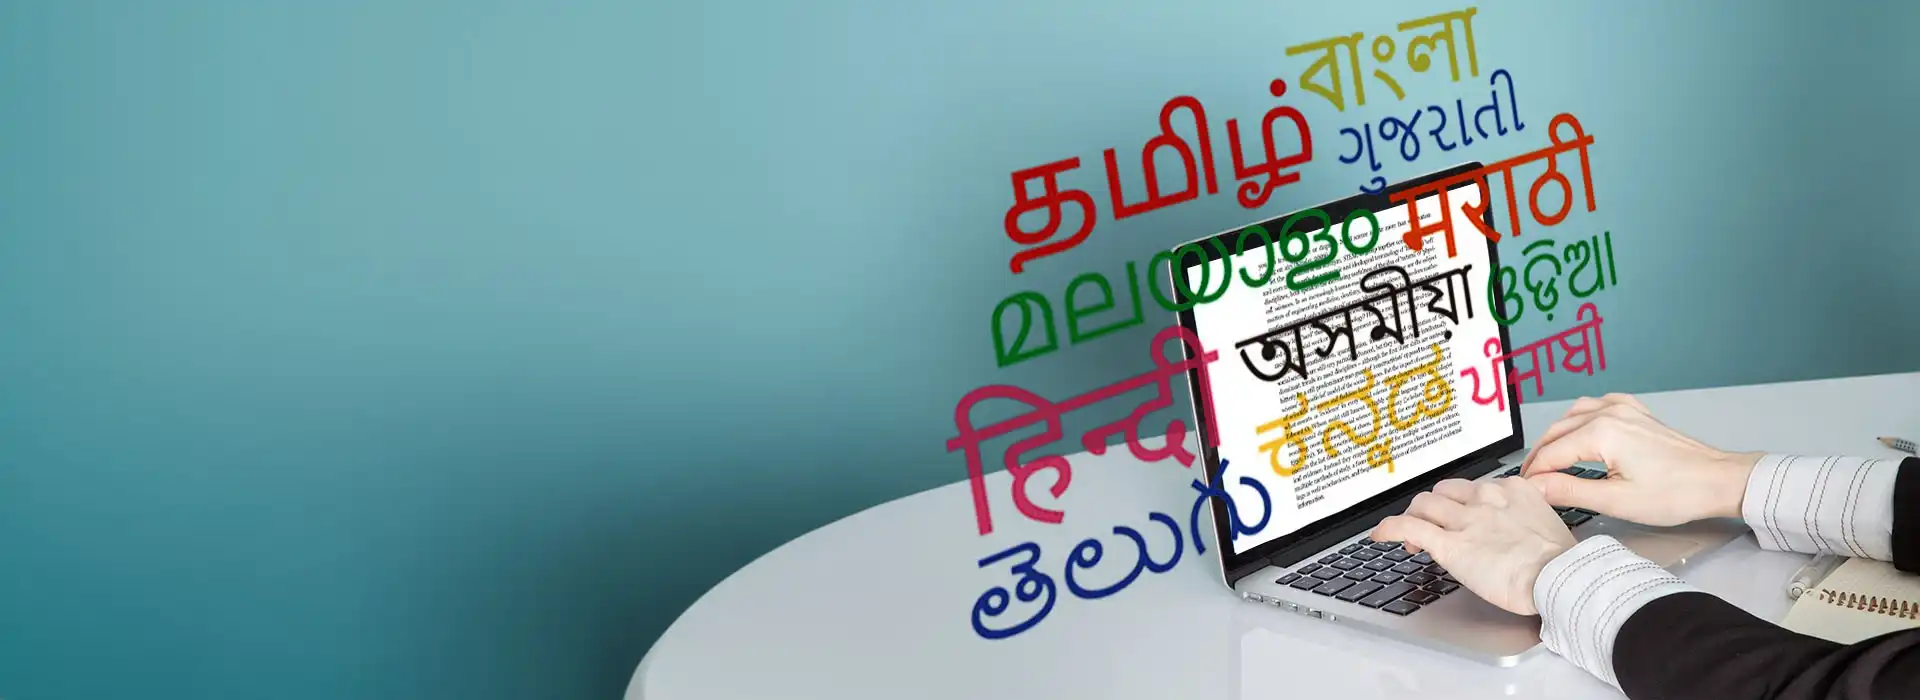 Indian languages typesetting